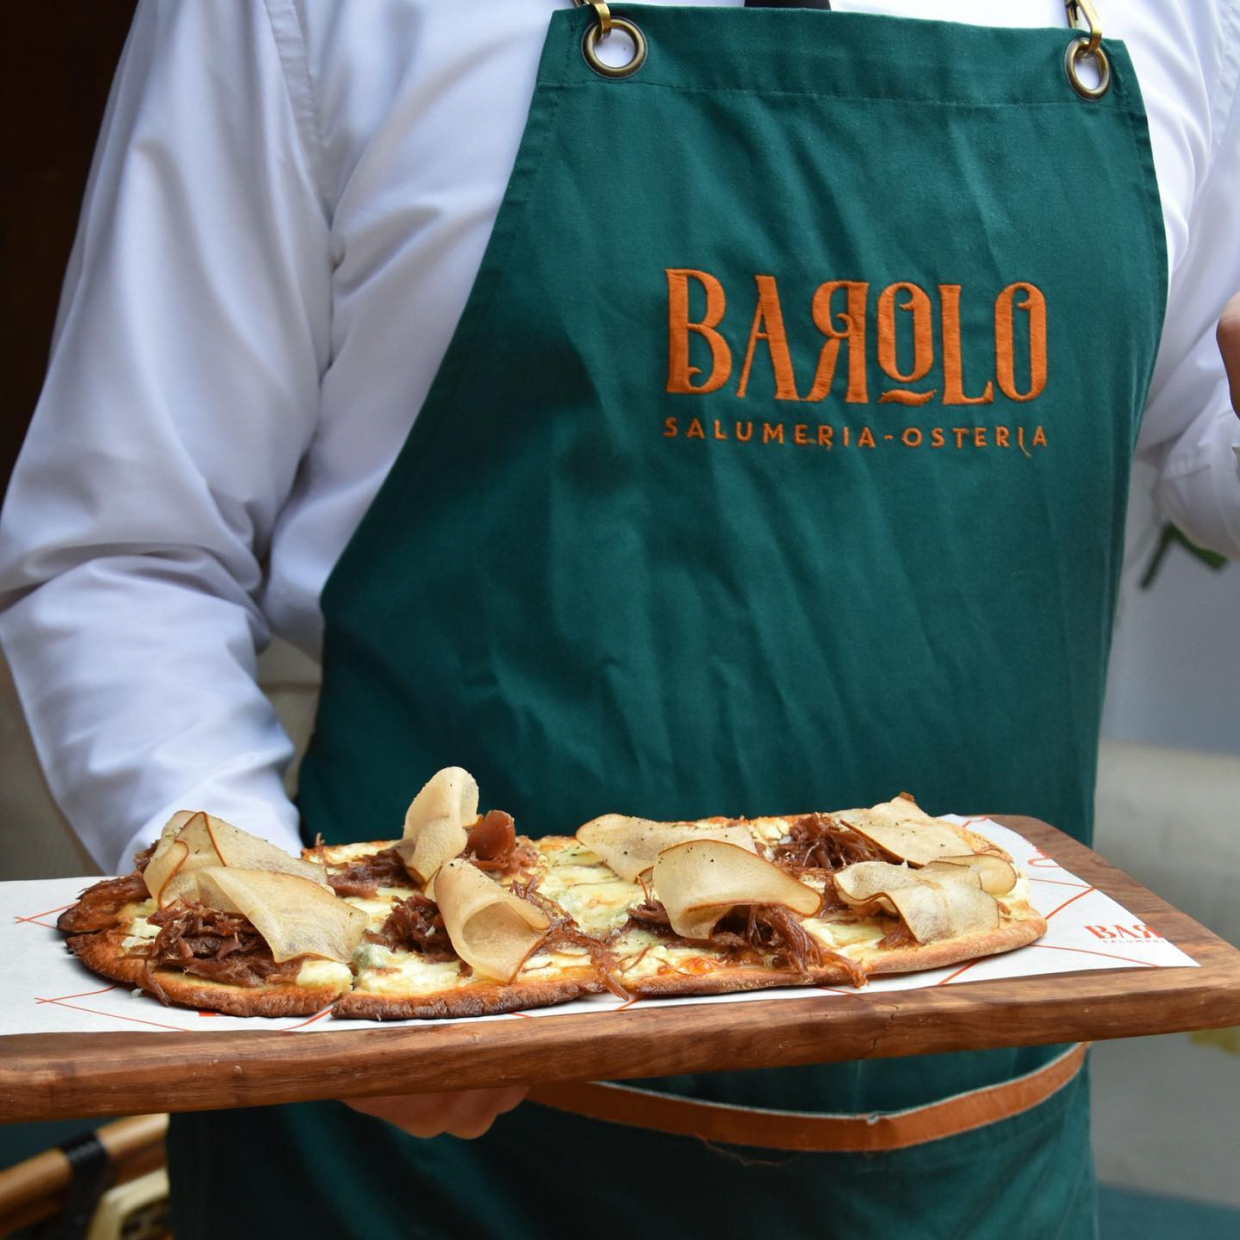 Barolo Athens: Το all day εστιατόριο-deli που έφερε την Ιταλία στο Παλαιό Ψυχικό